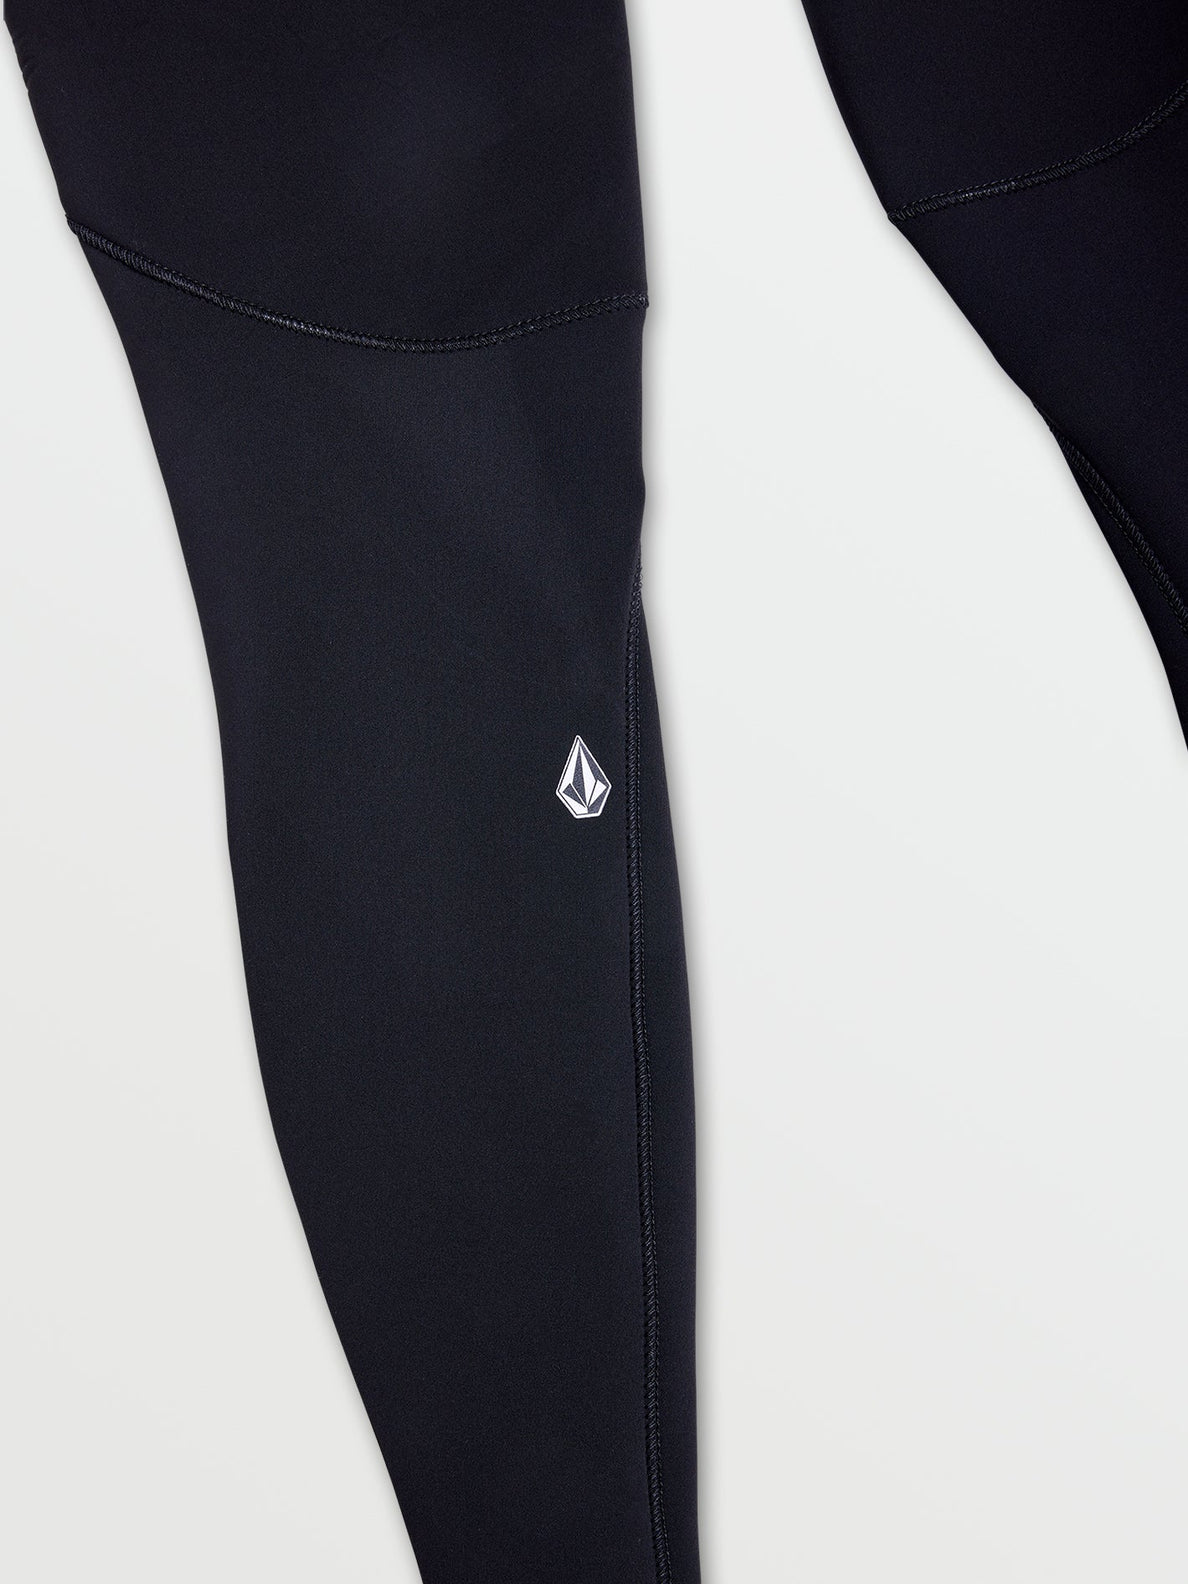 Modulator 4/3mm Chest Zip Wetsuit - Black